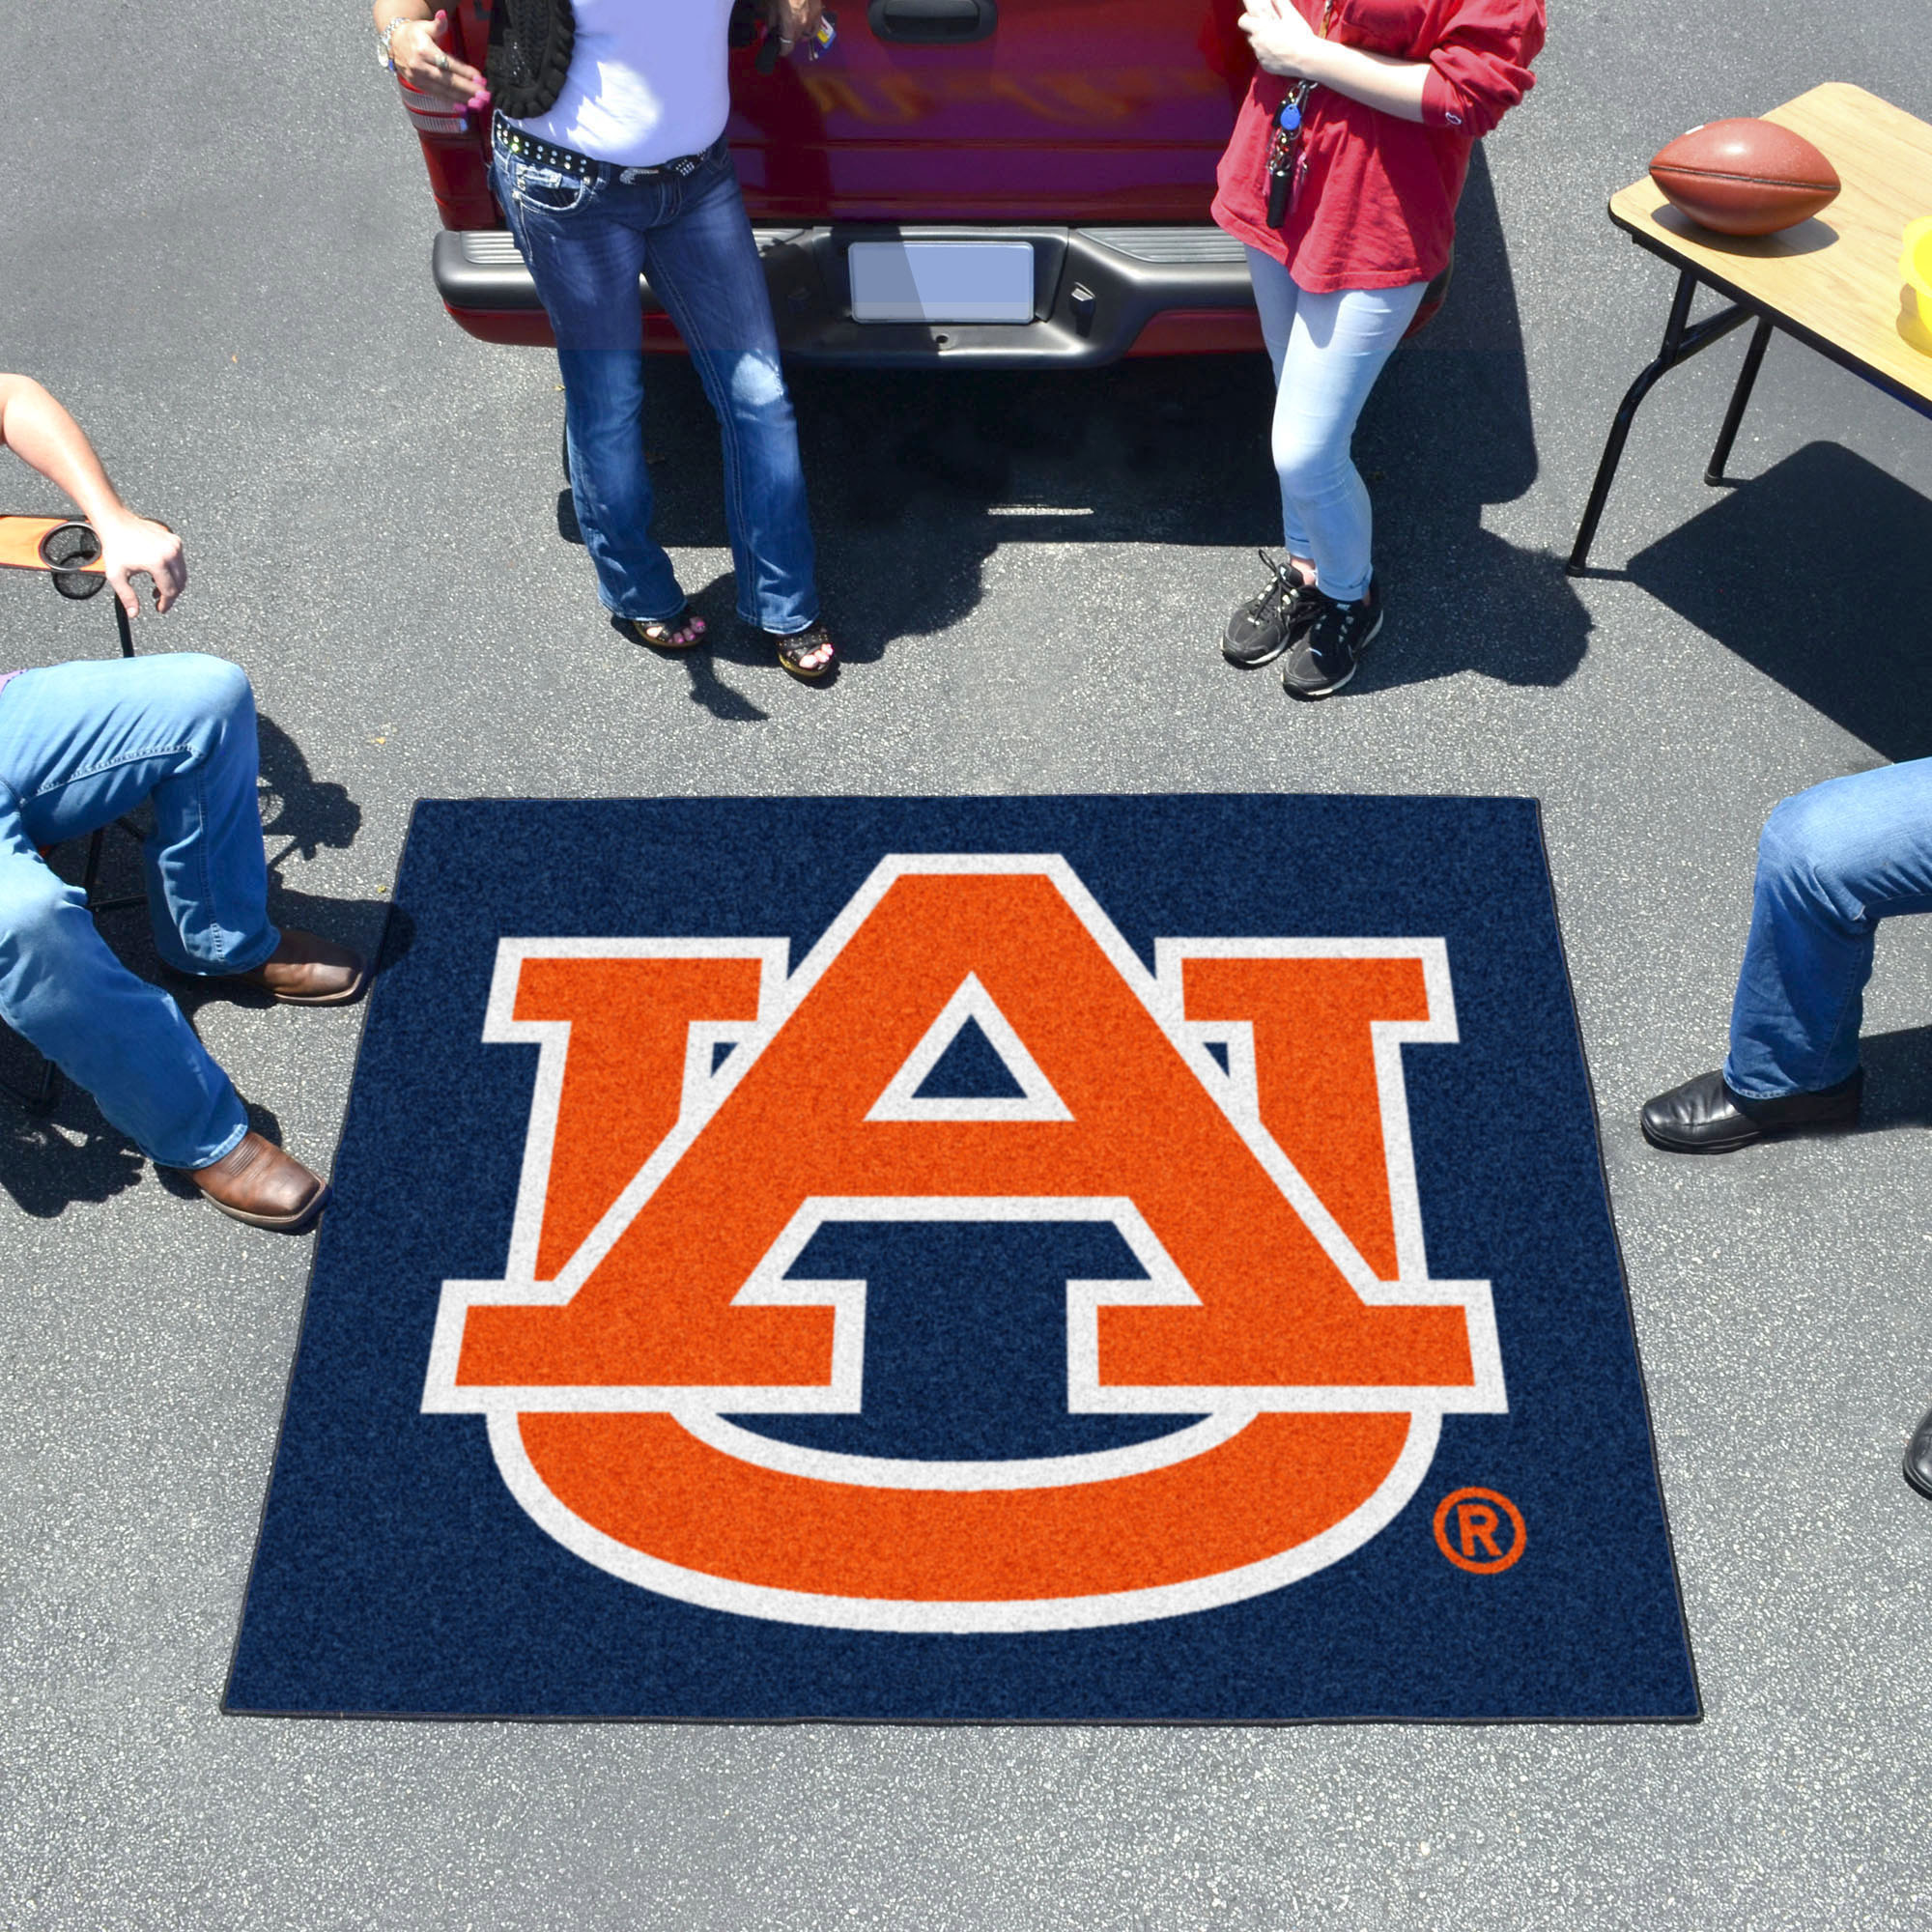 Auburn University "AU" Outdoor Tailgater Mat